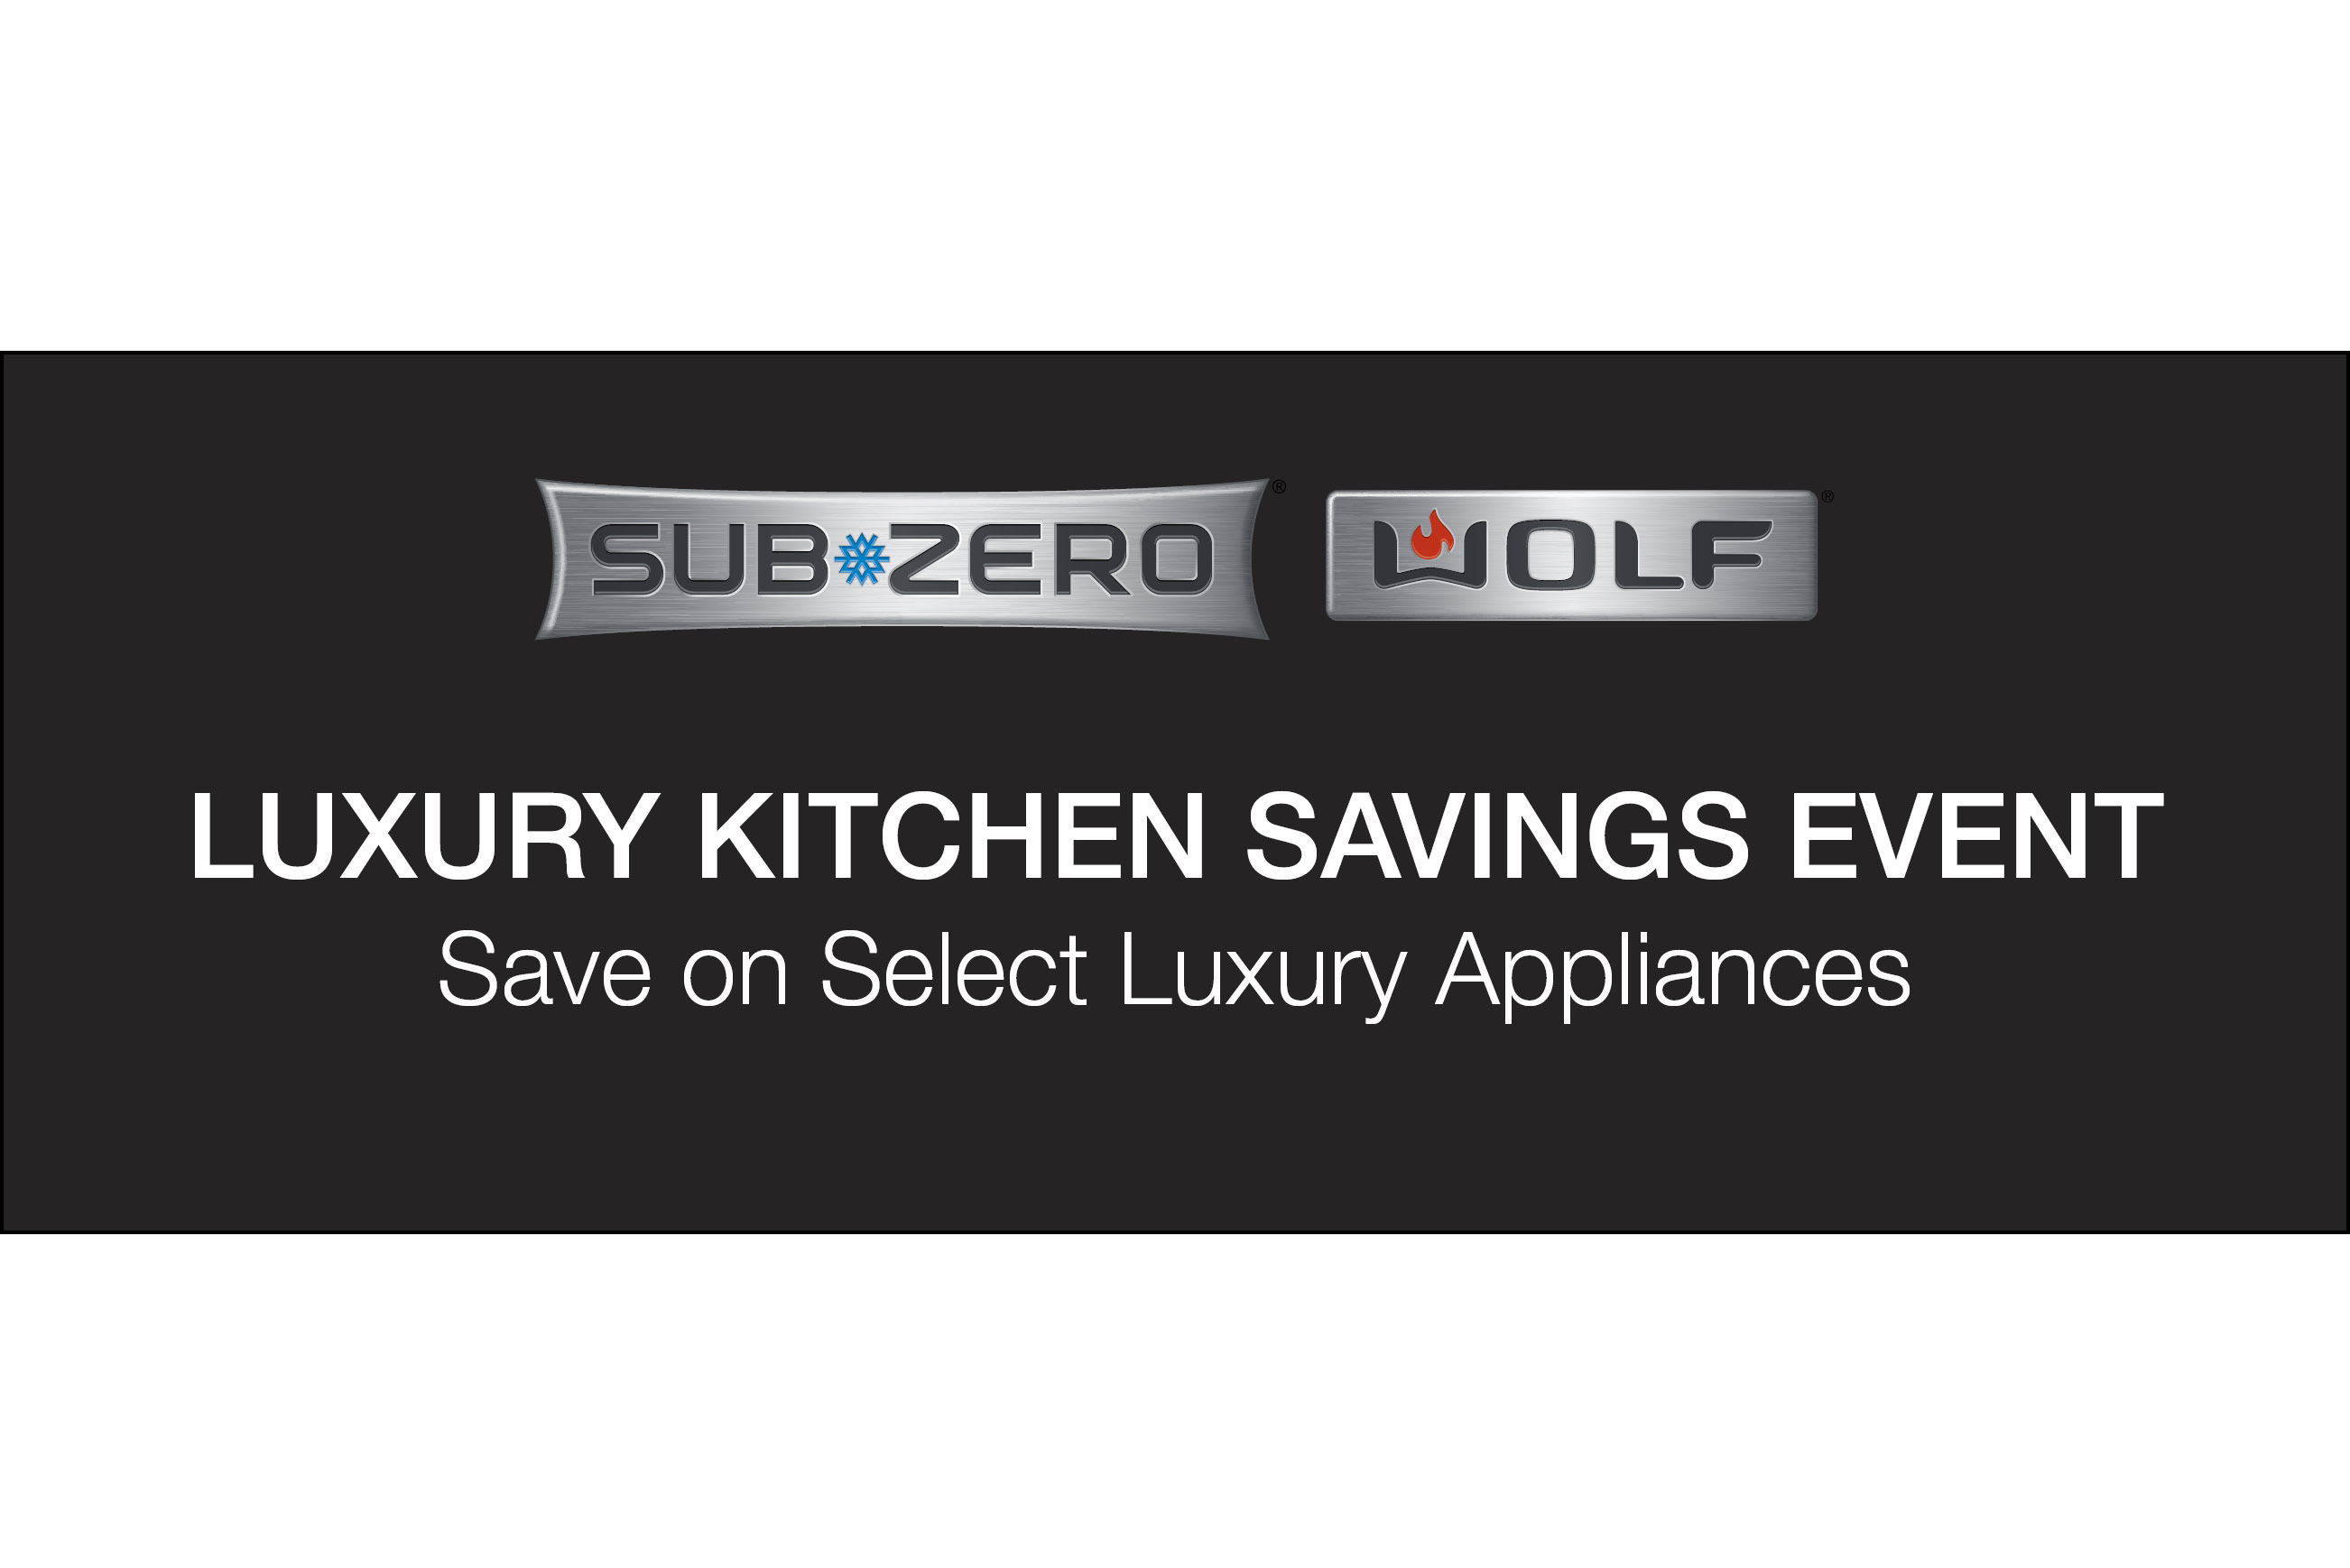 The Luxury Kitchen Savings Event